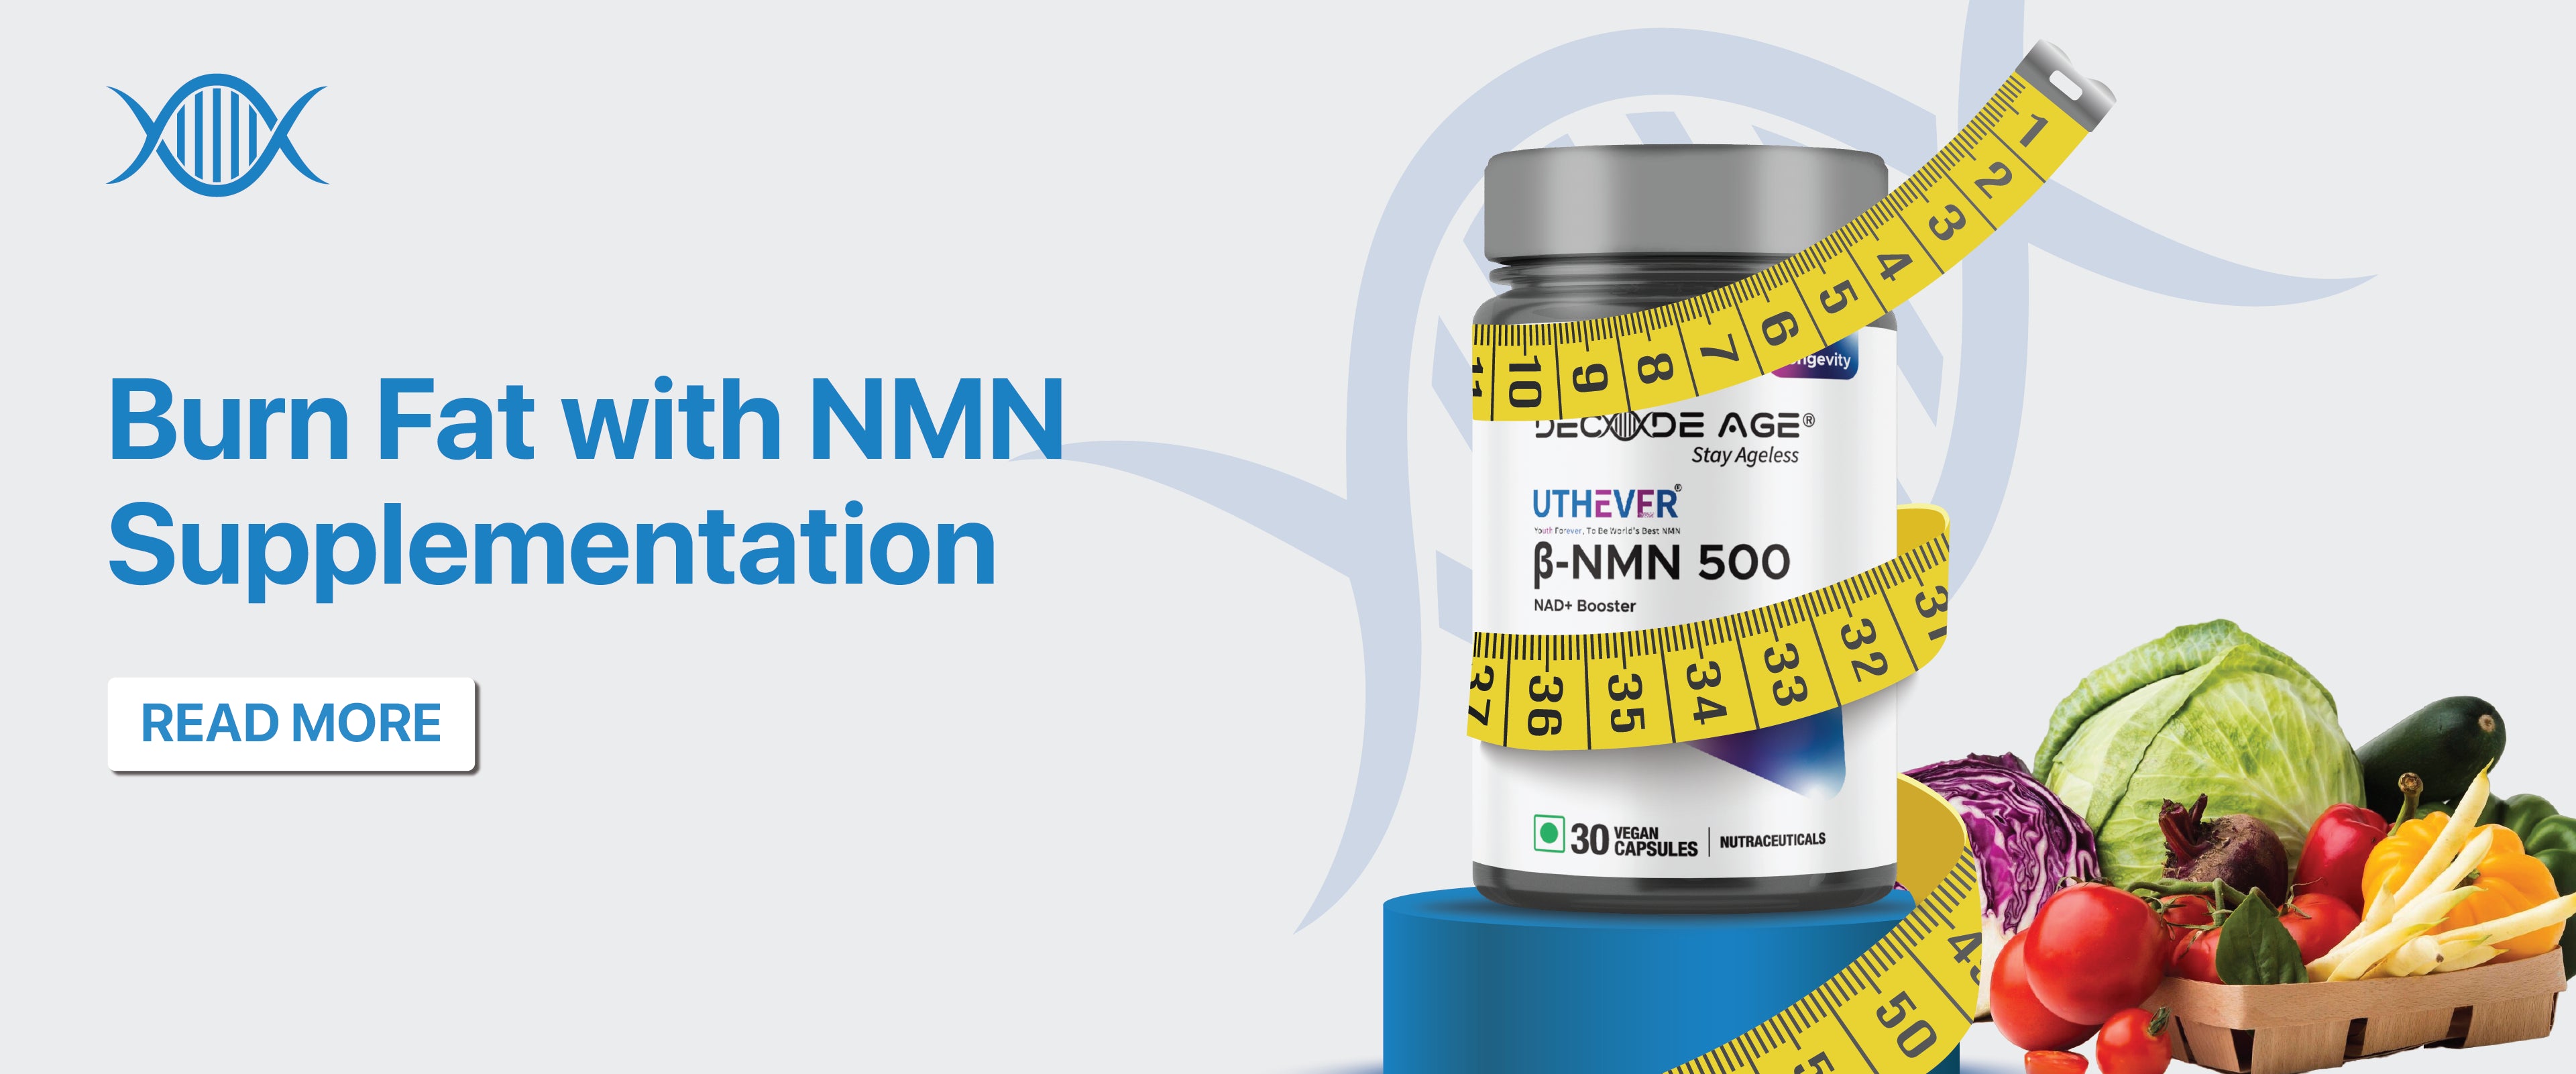 Burn Fat with NMN Supplementation